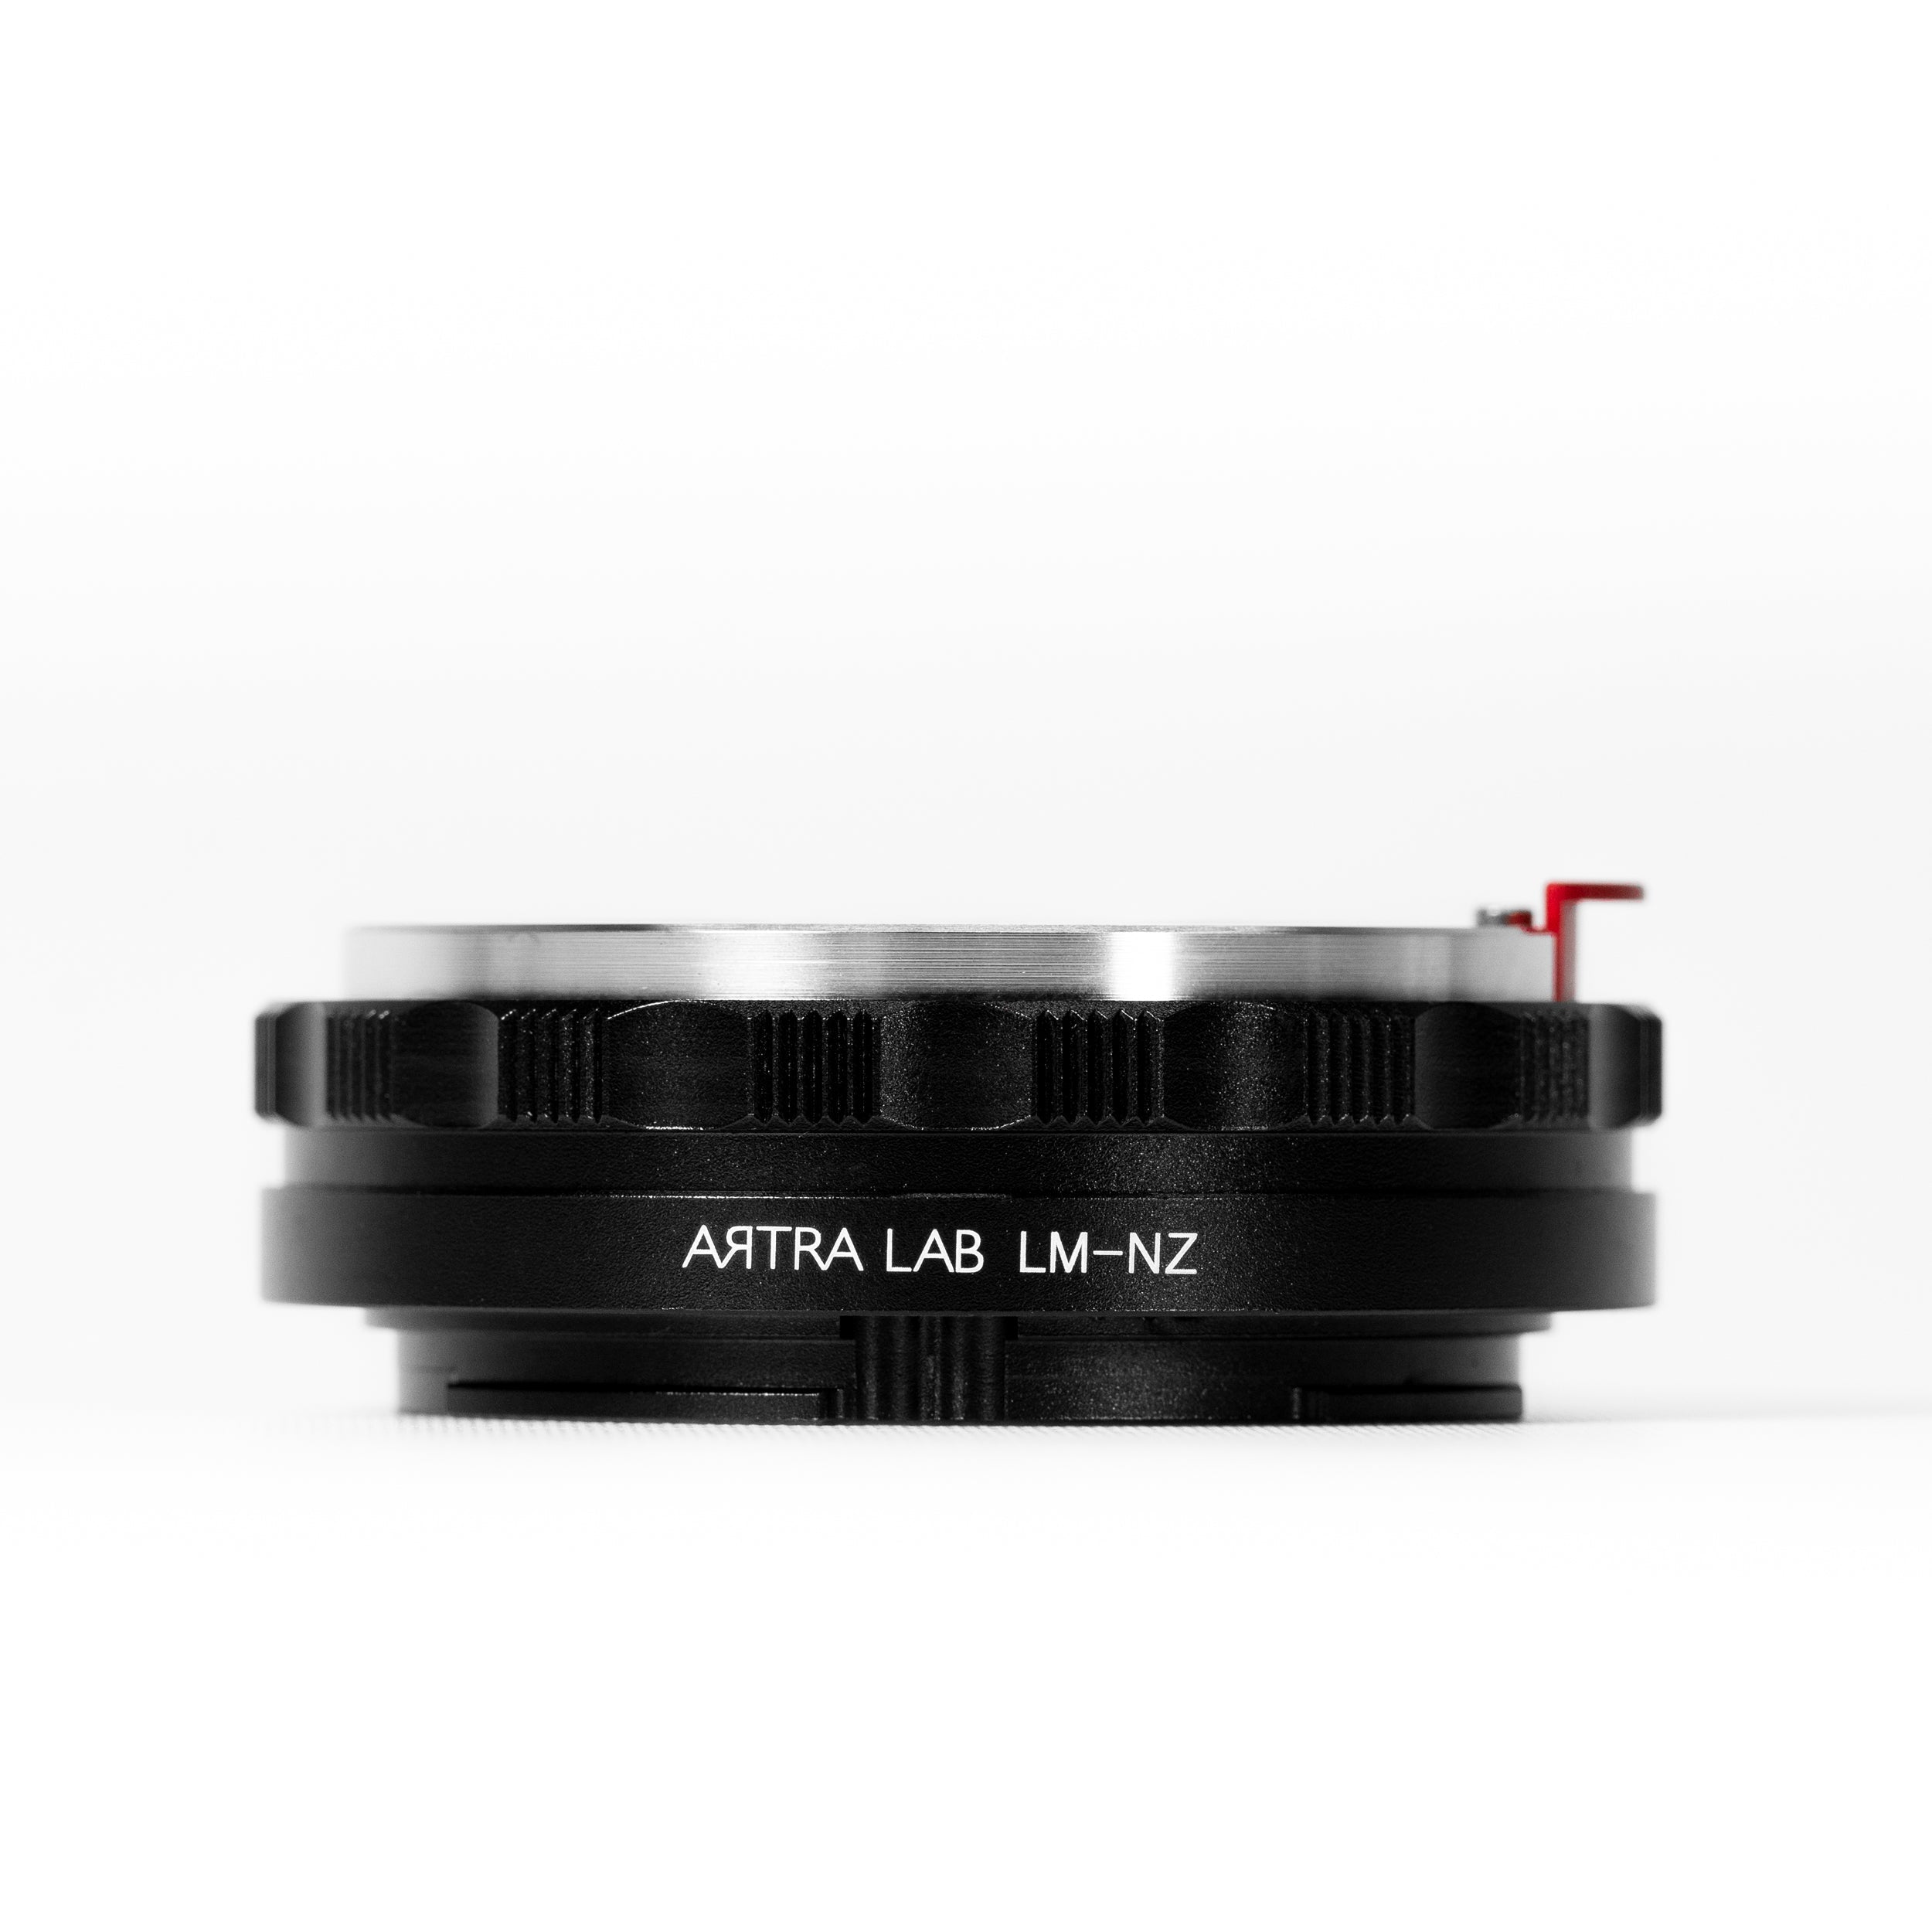 ARTRA LAB Leica M Mount To Nikon Z Mount Body  Macro Adapter (Copper) / Close Focus Adapter